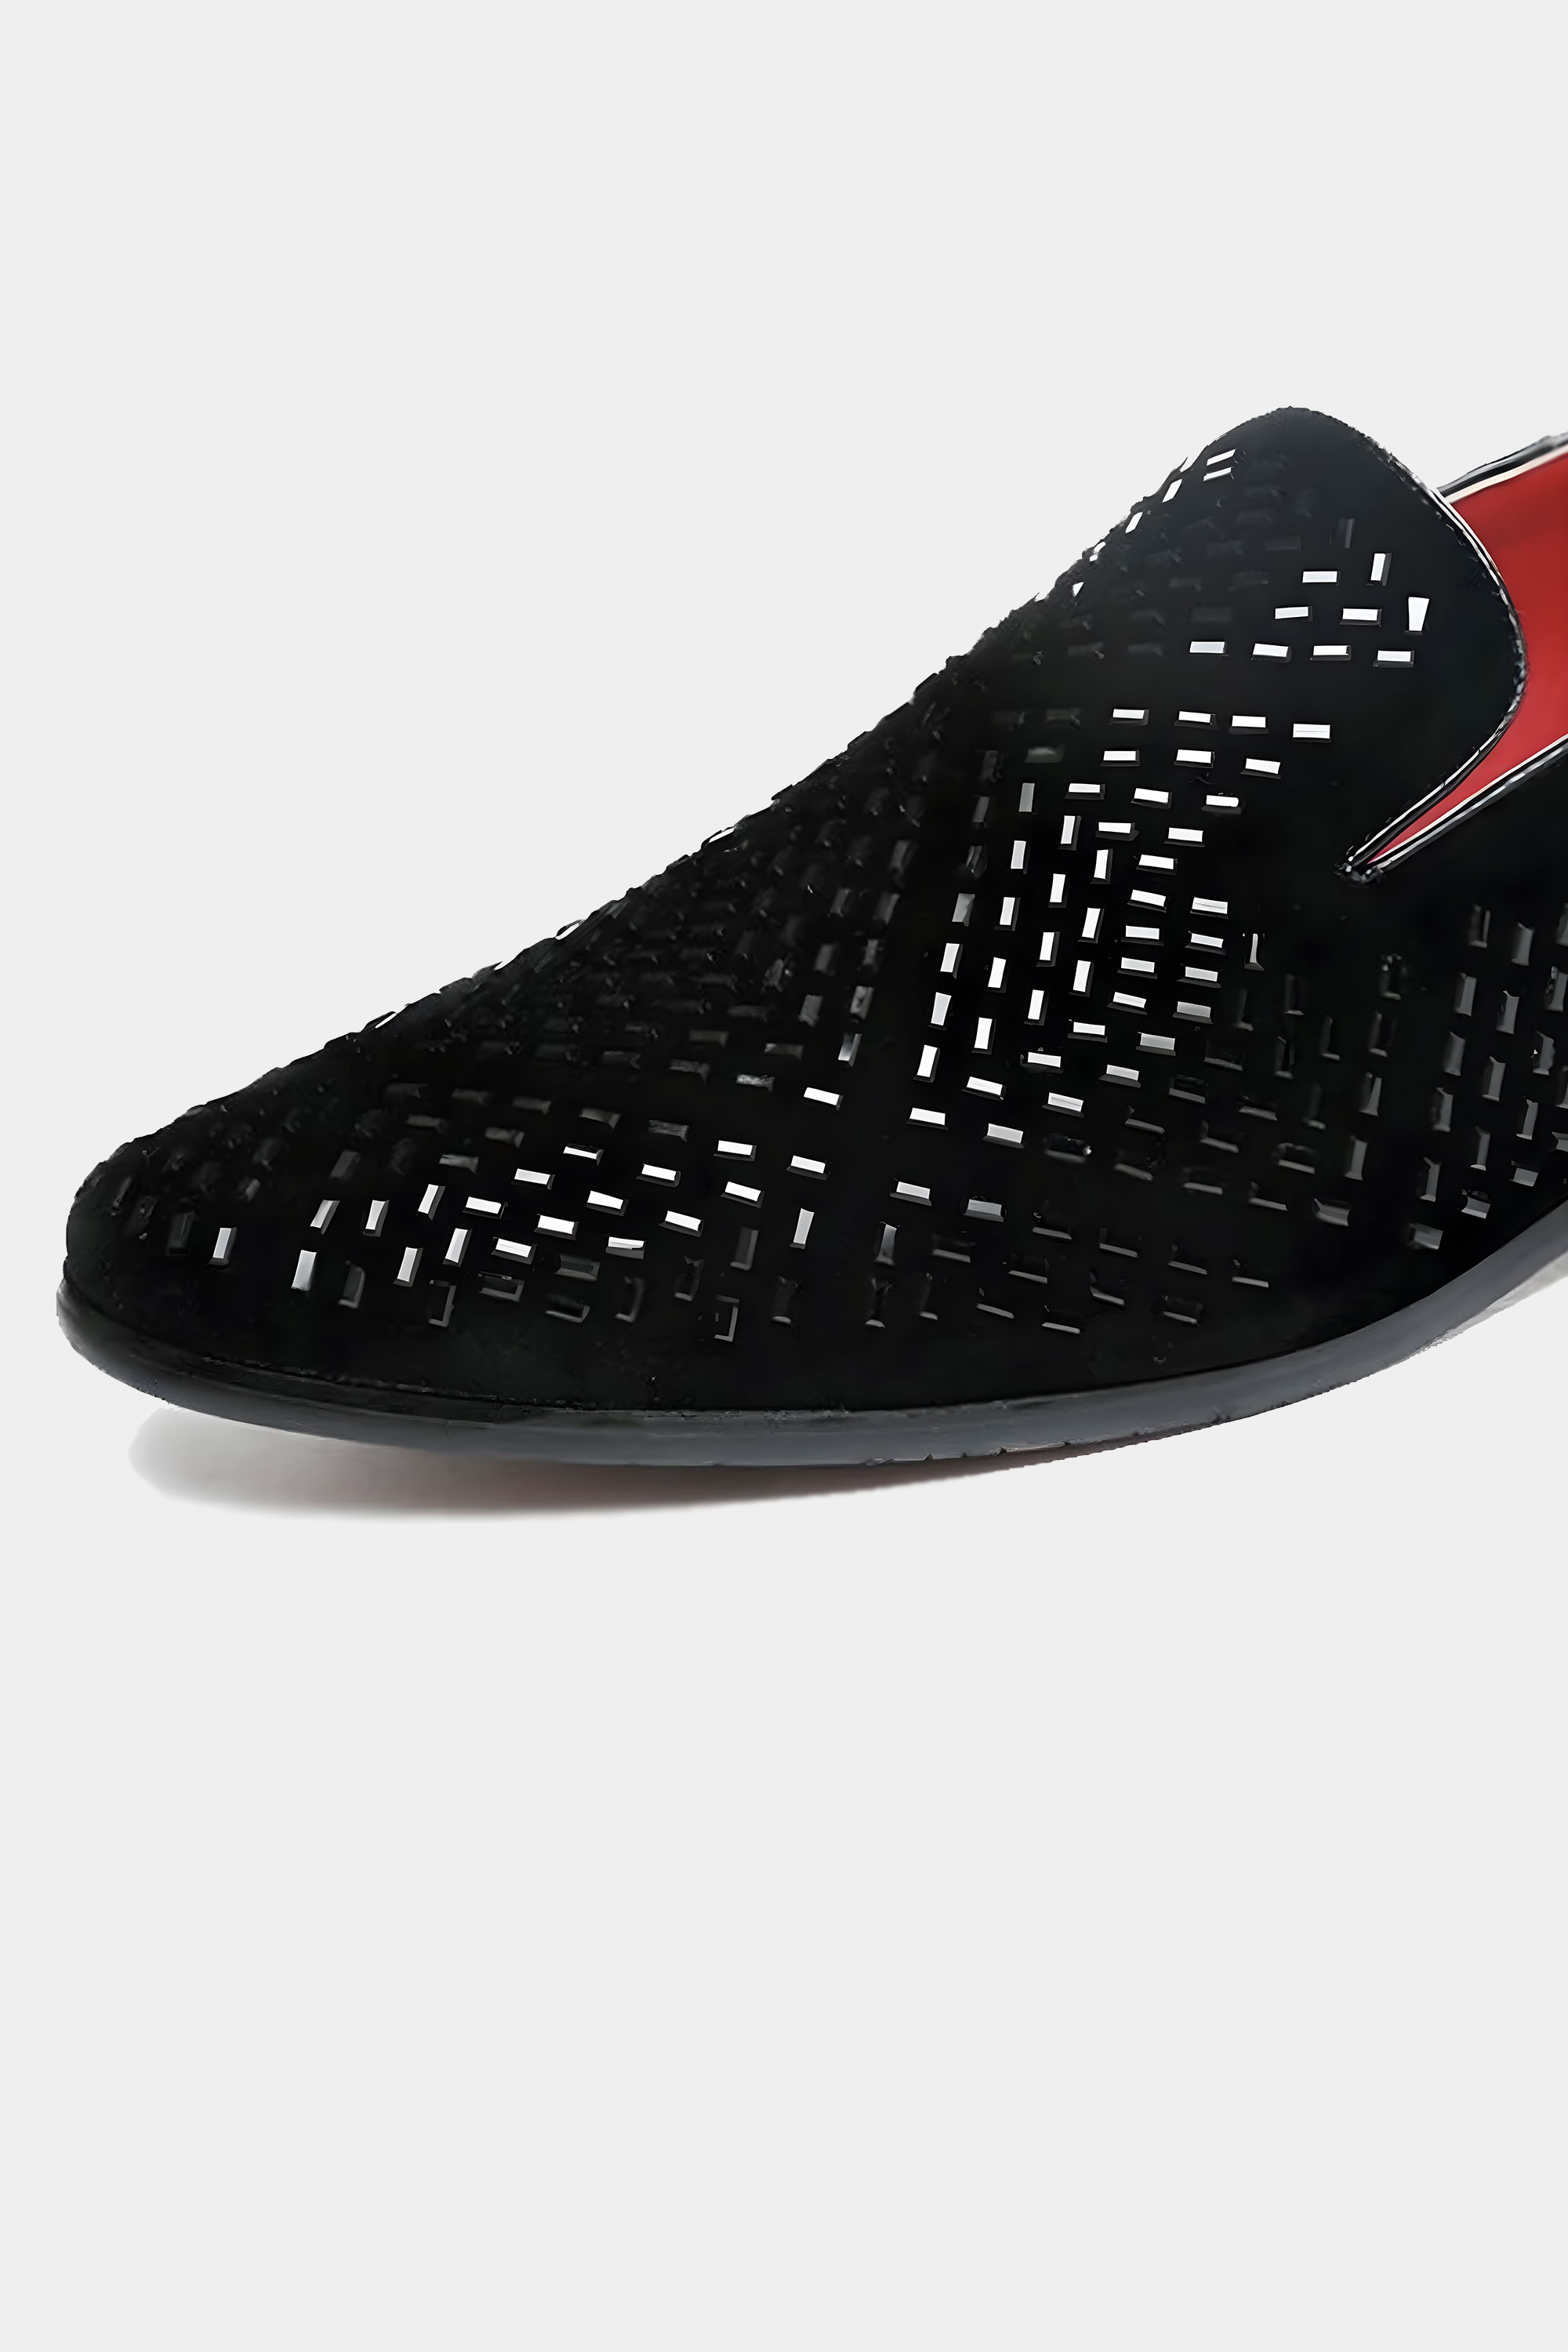 Black-Rhinestone-Loafers-Shoes-from-Gentlemansguru.com